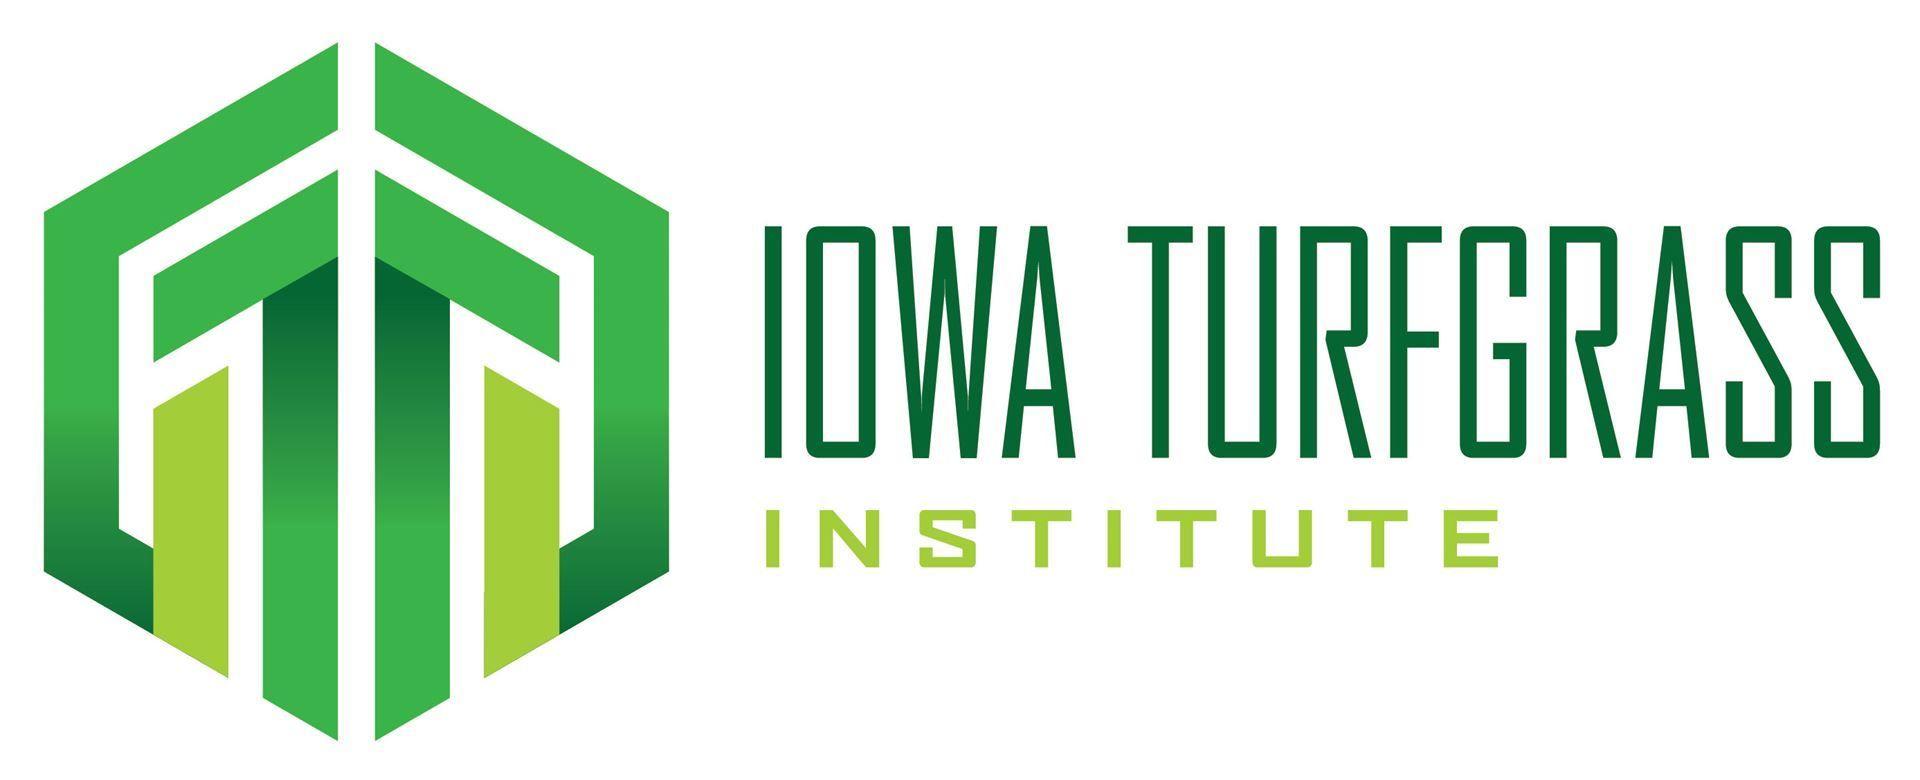 Turfgrass Logo - Iowa Turfgrass Institute - Program